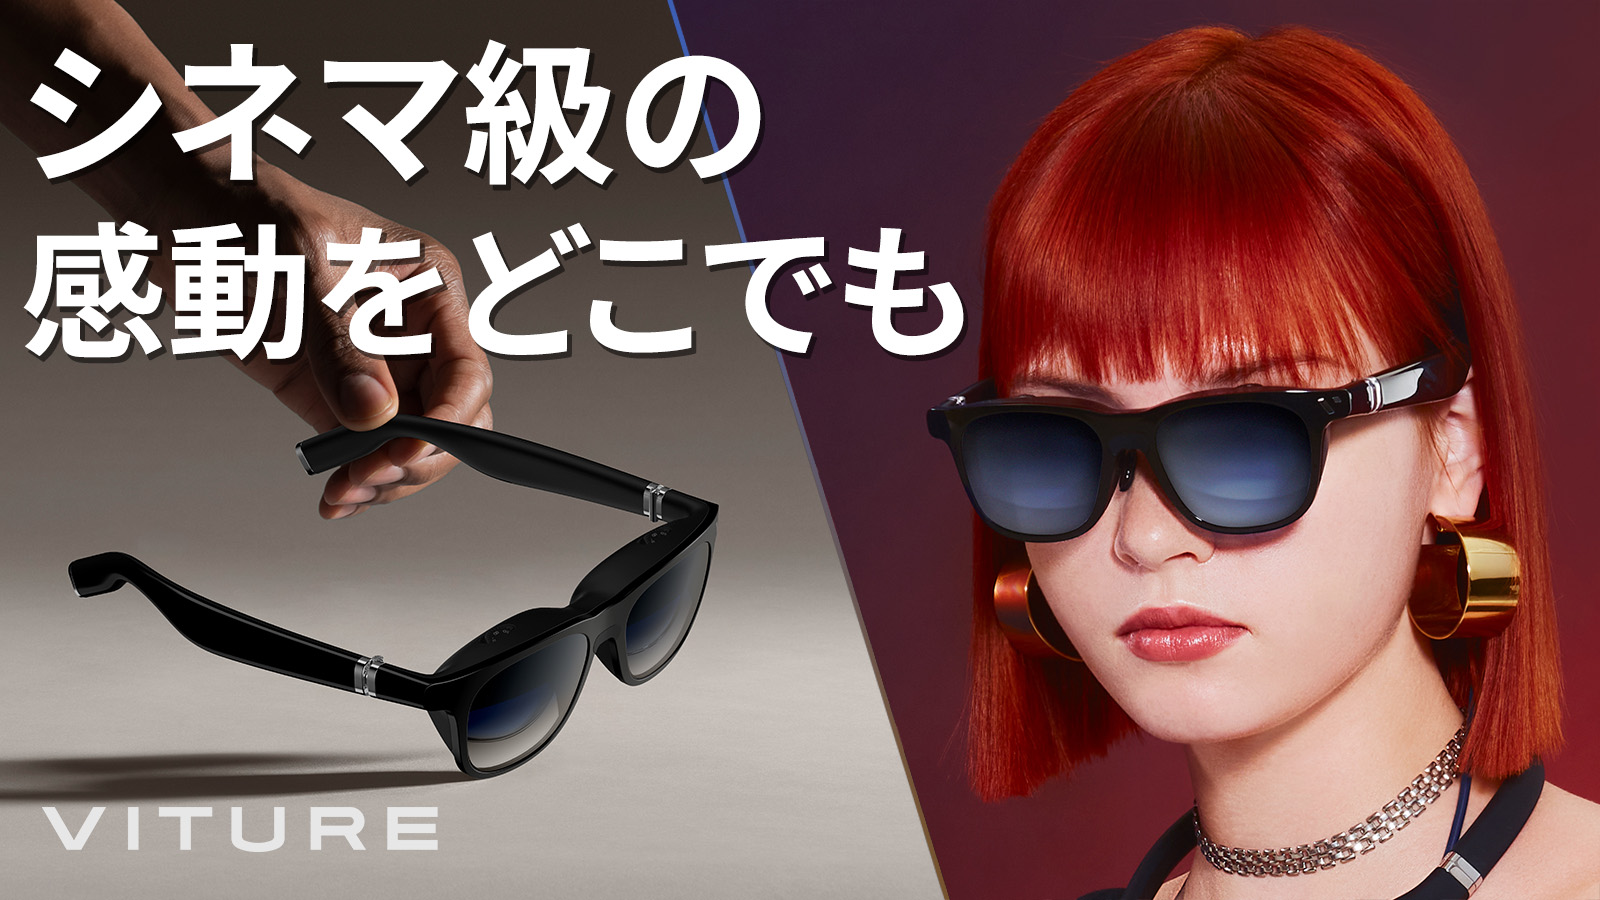 XR型スマートグラス「VITURE One」の一般販売が本日11月22日21時より